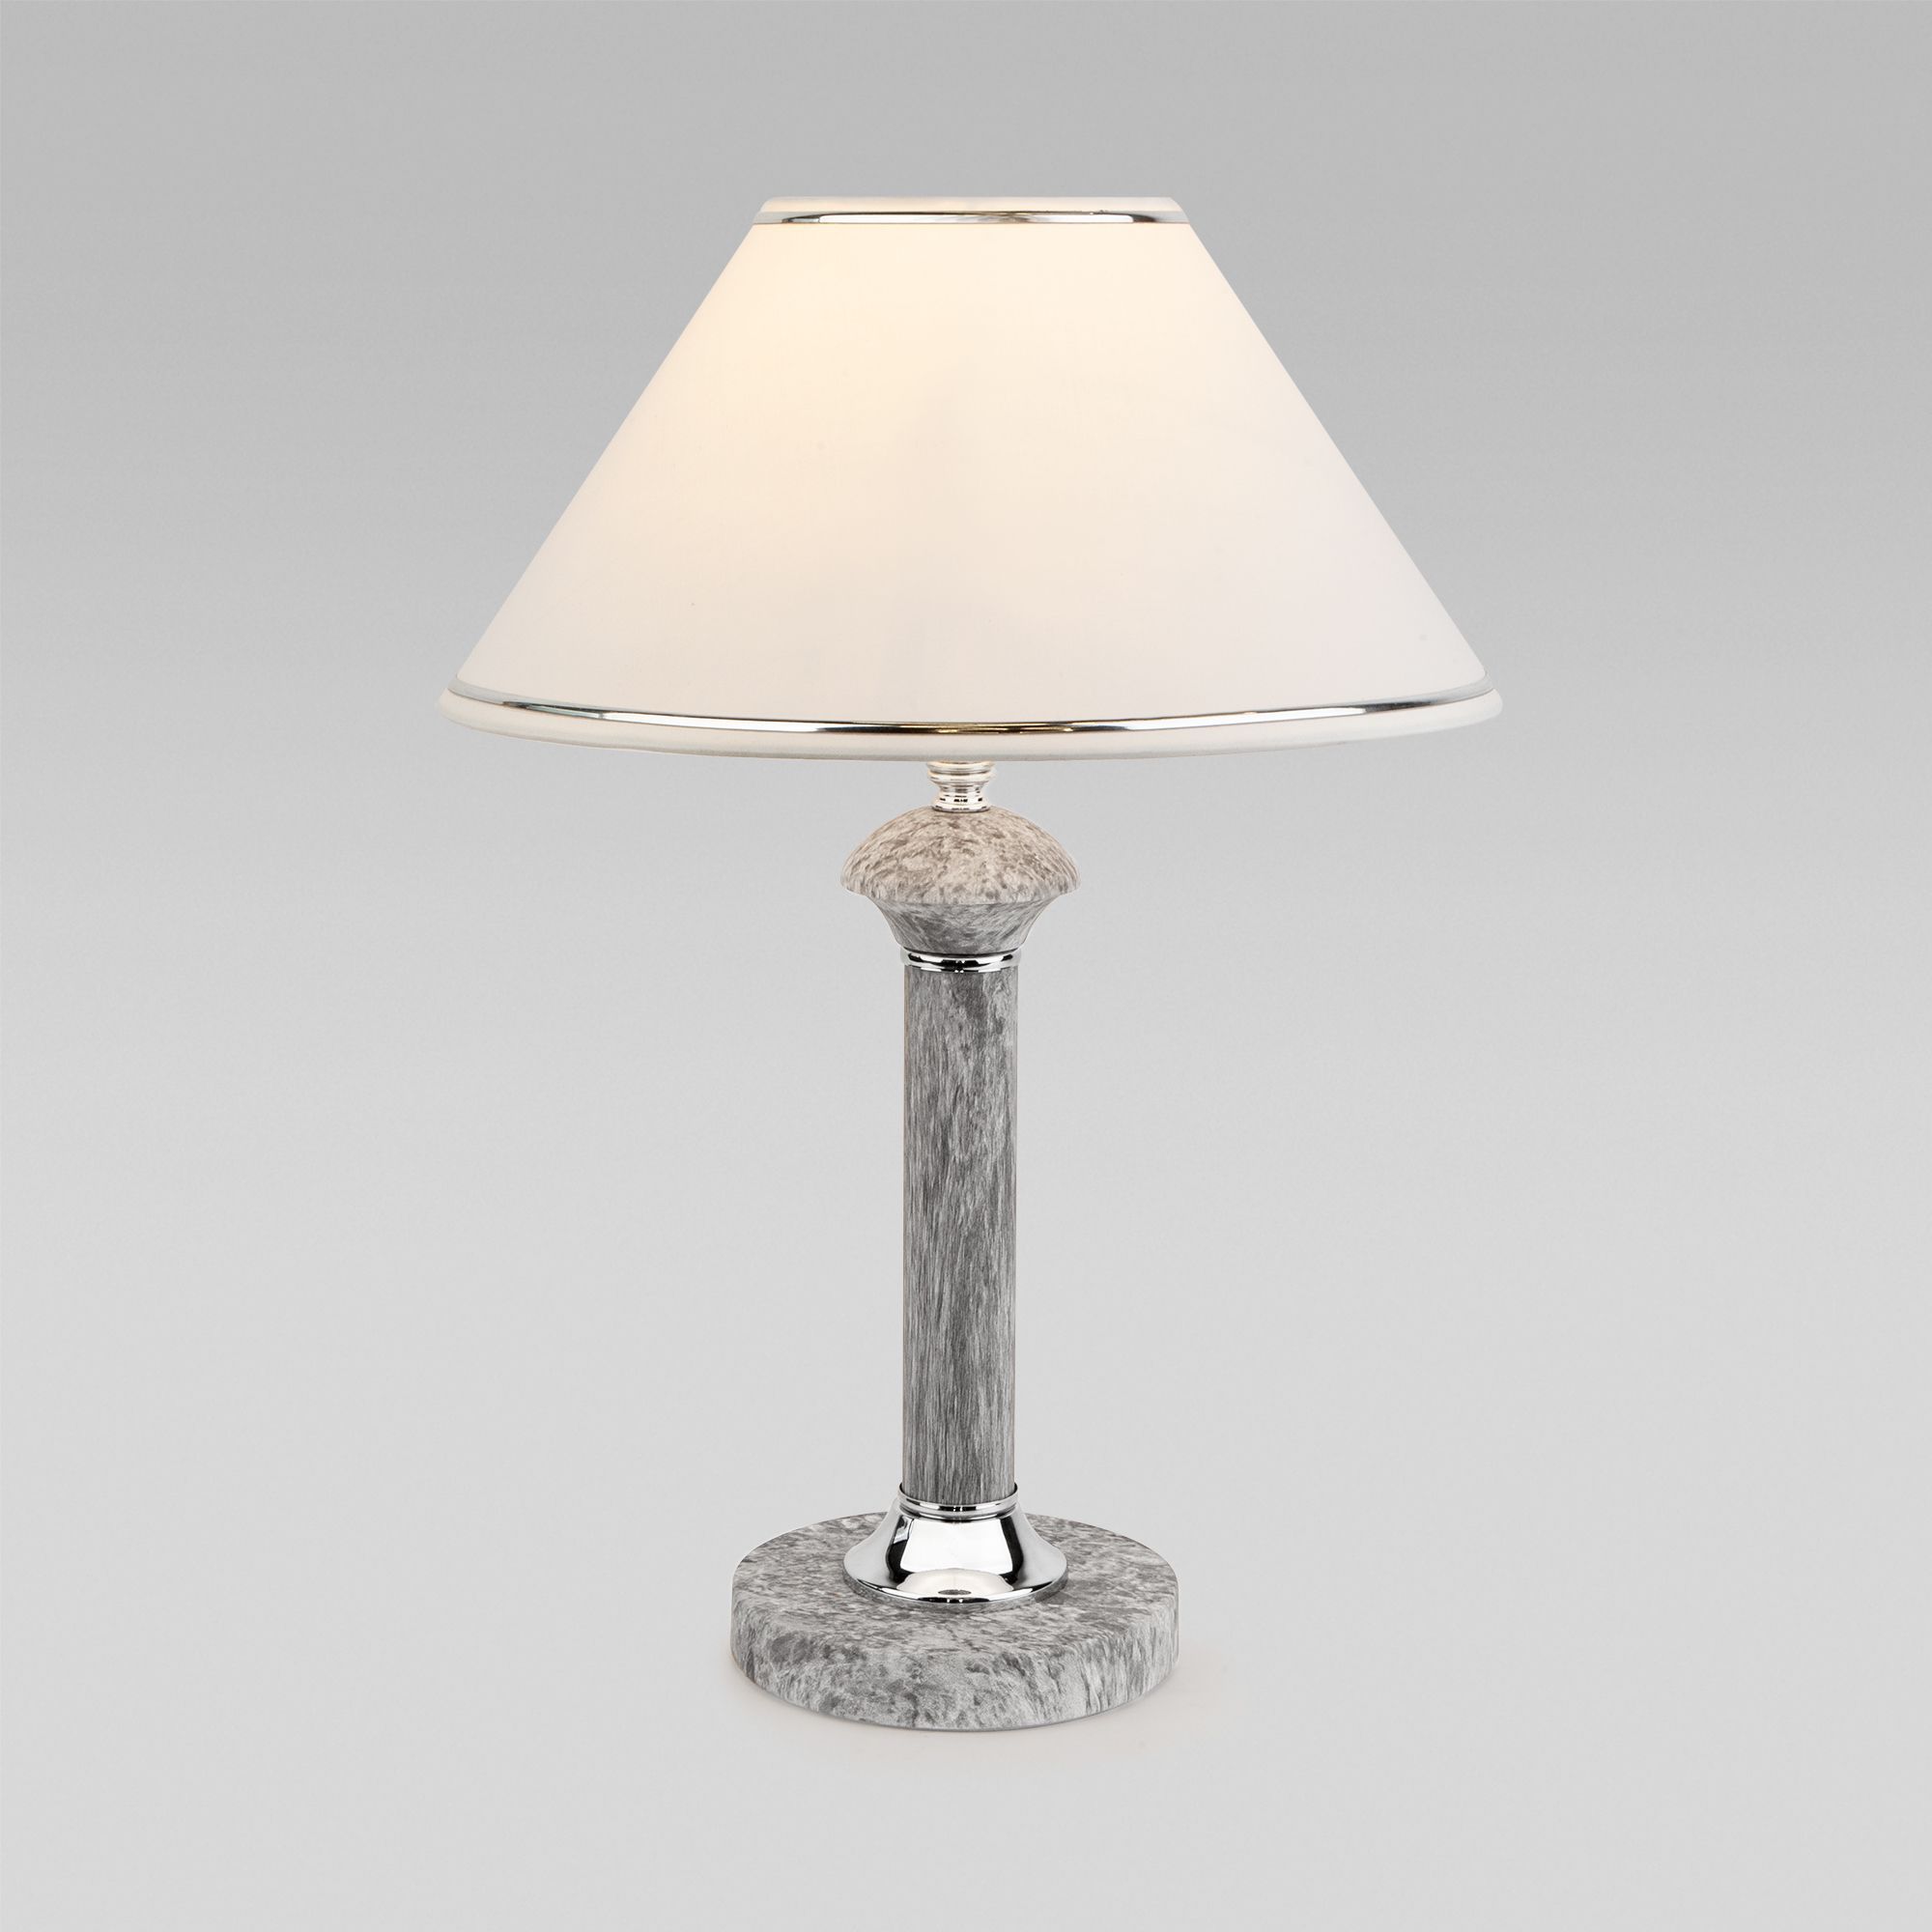 Классическая настольная лампа 60019/1 мрамор  Eurosvet - Фото 4